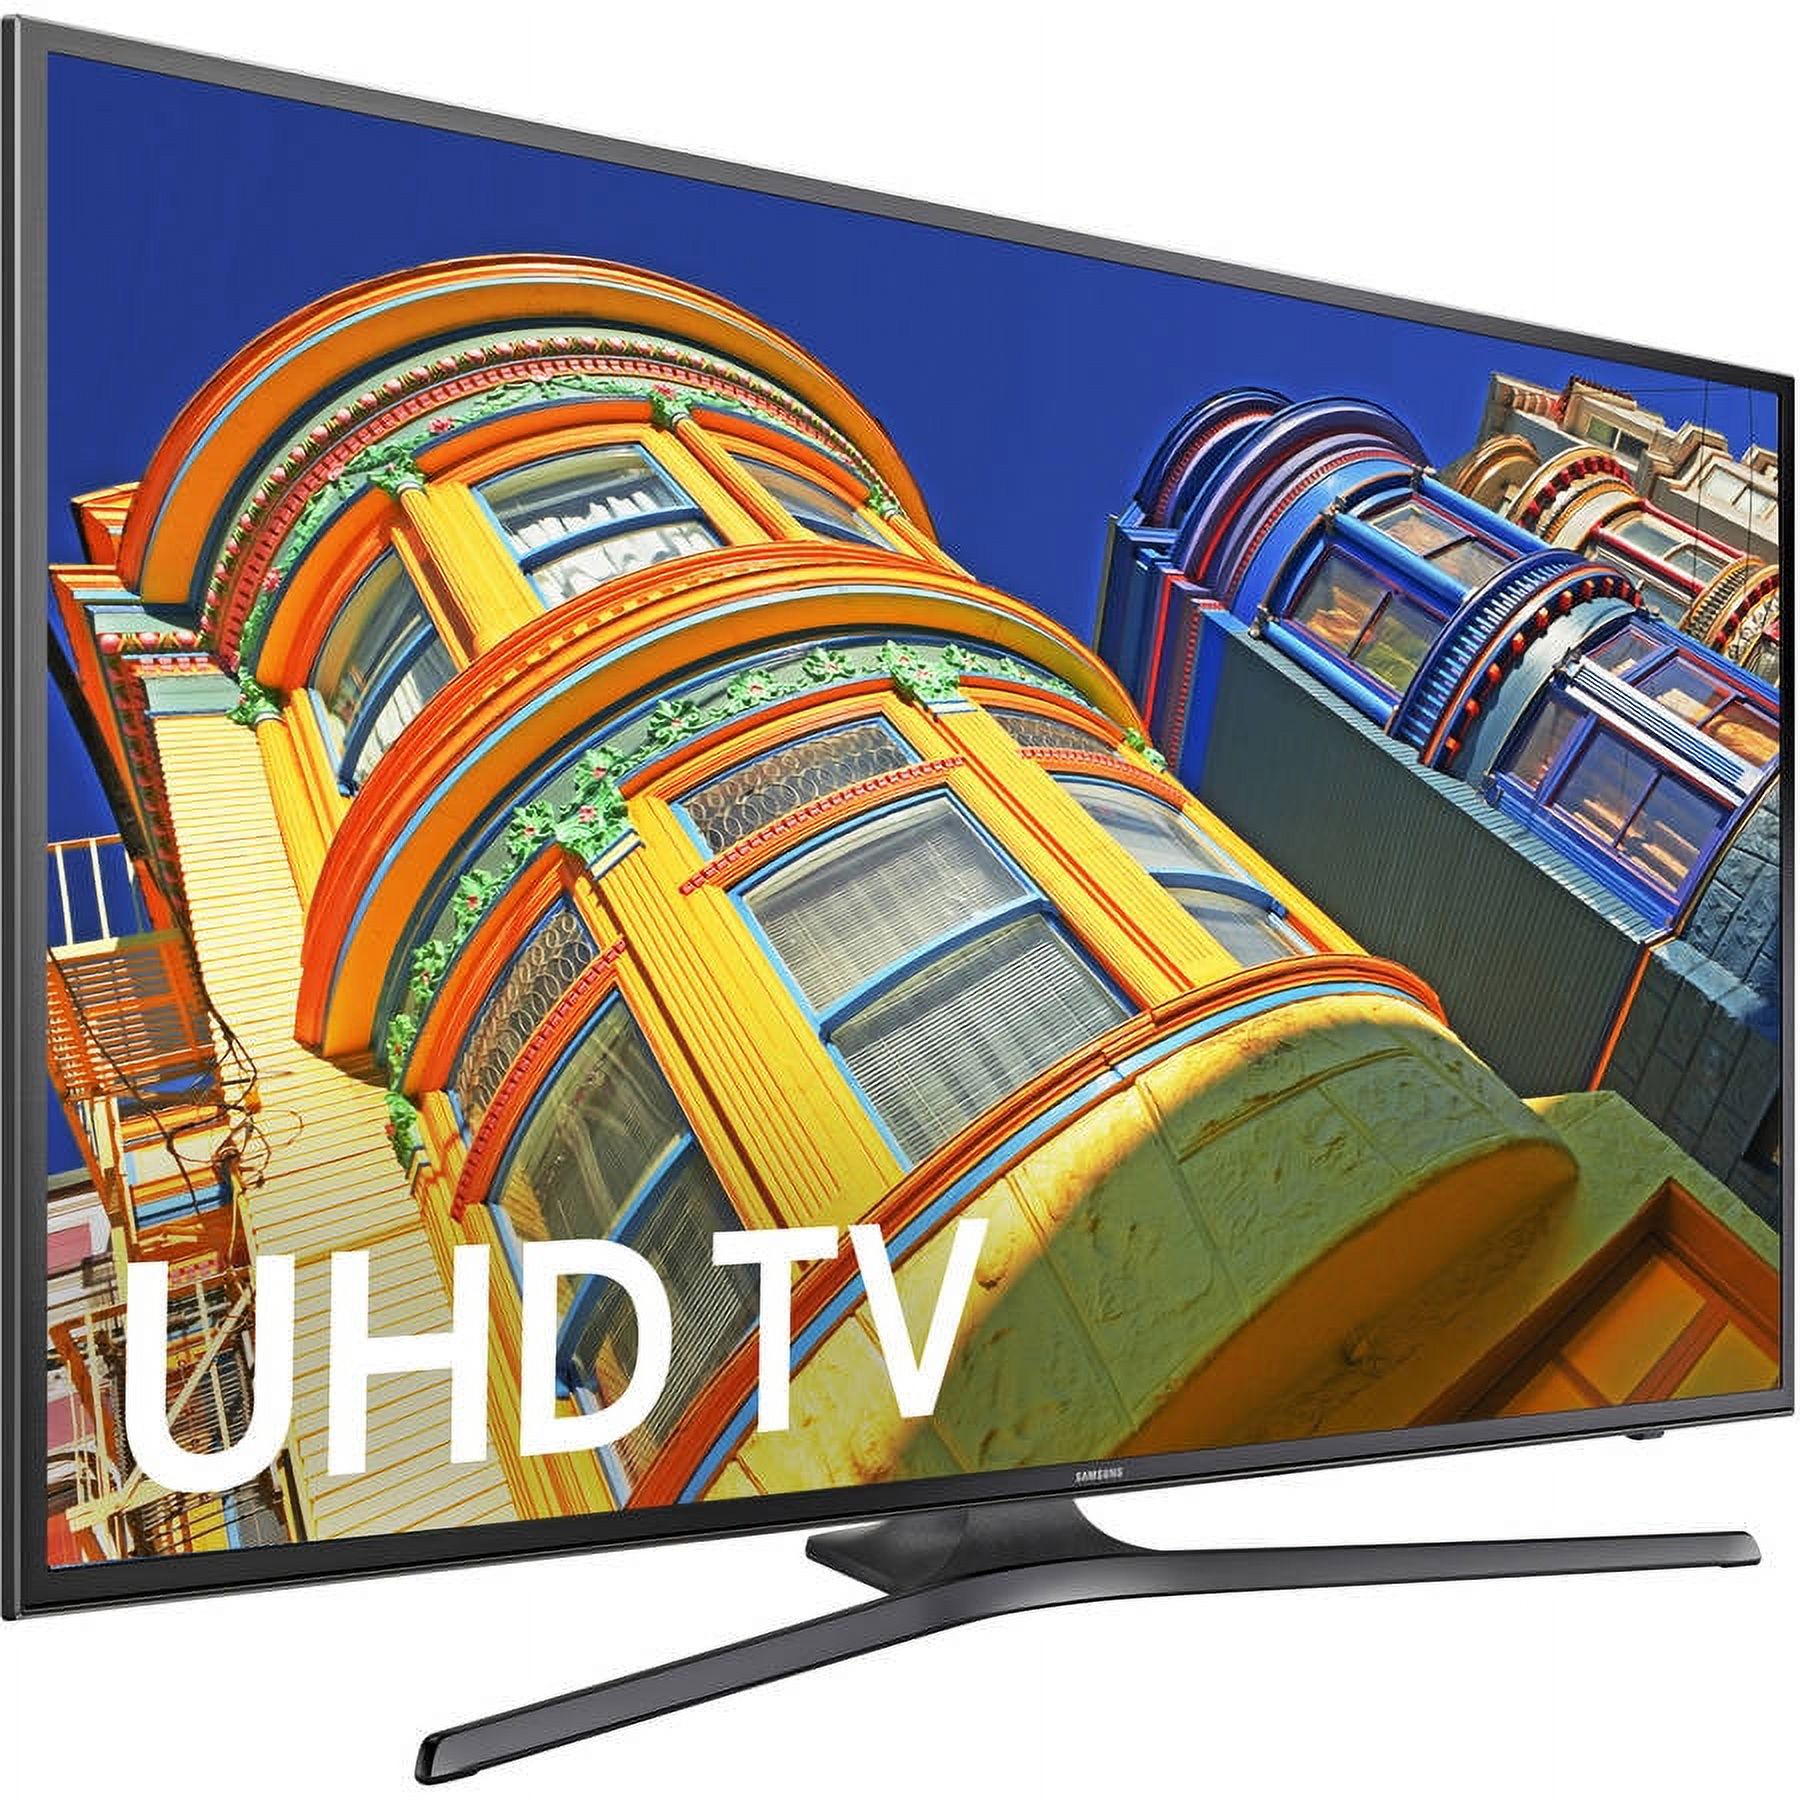 Samsung 55-inch 4k ultra hd smart led tv w/ wifi, 2016 model - un55ku6300 - image 3 of 7